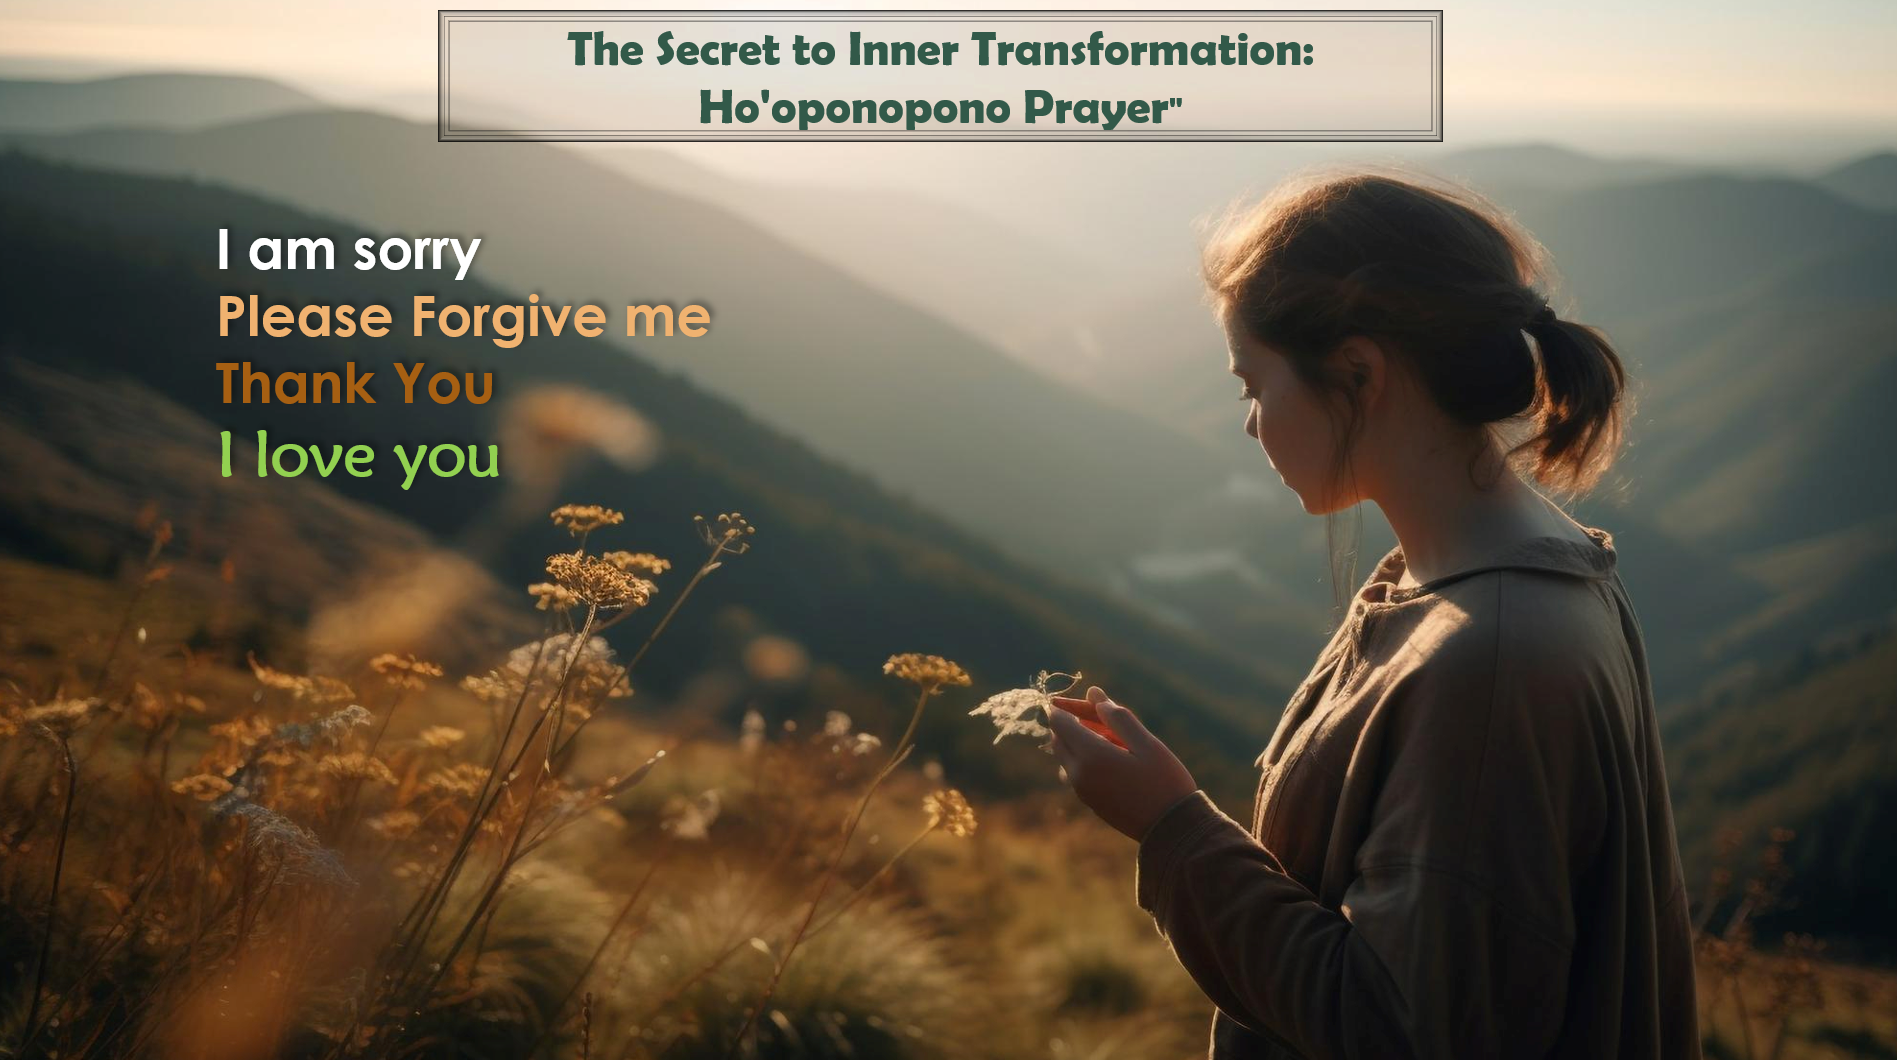 The Secret to Inner Transformation: Ho'oponopono Prayer